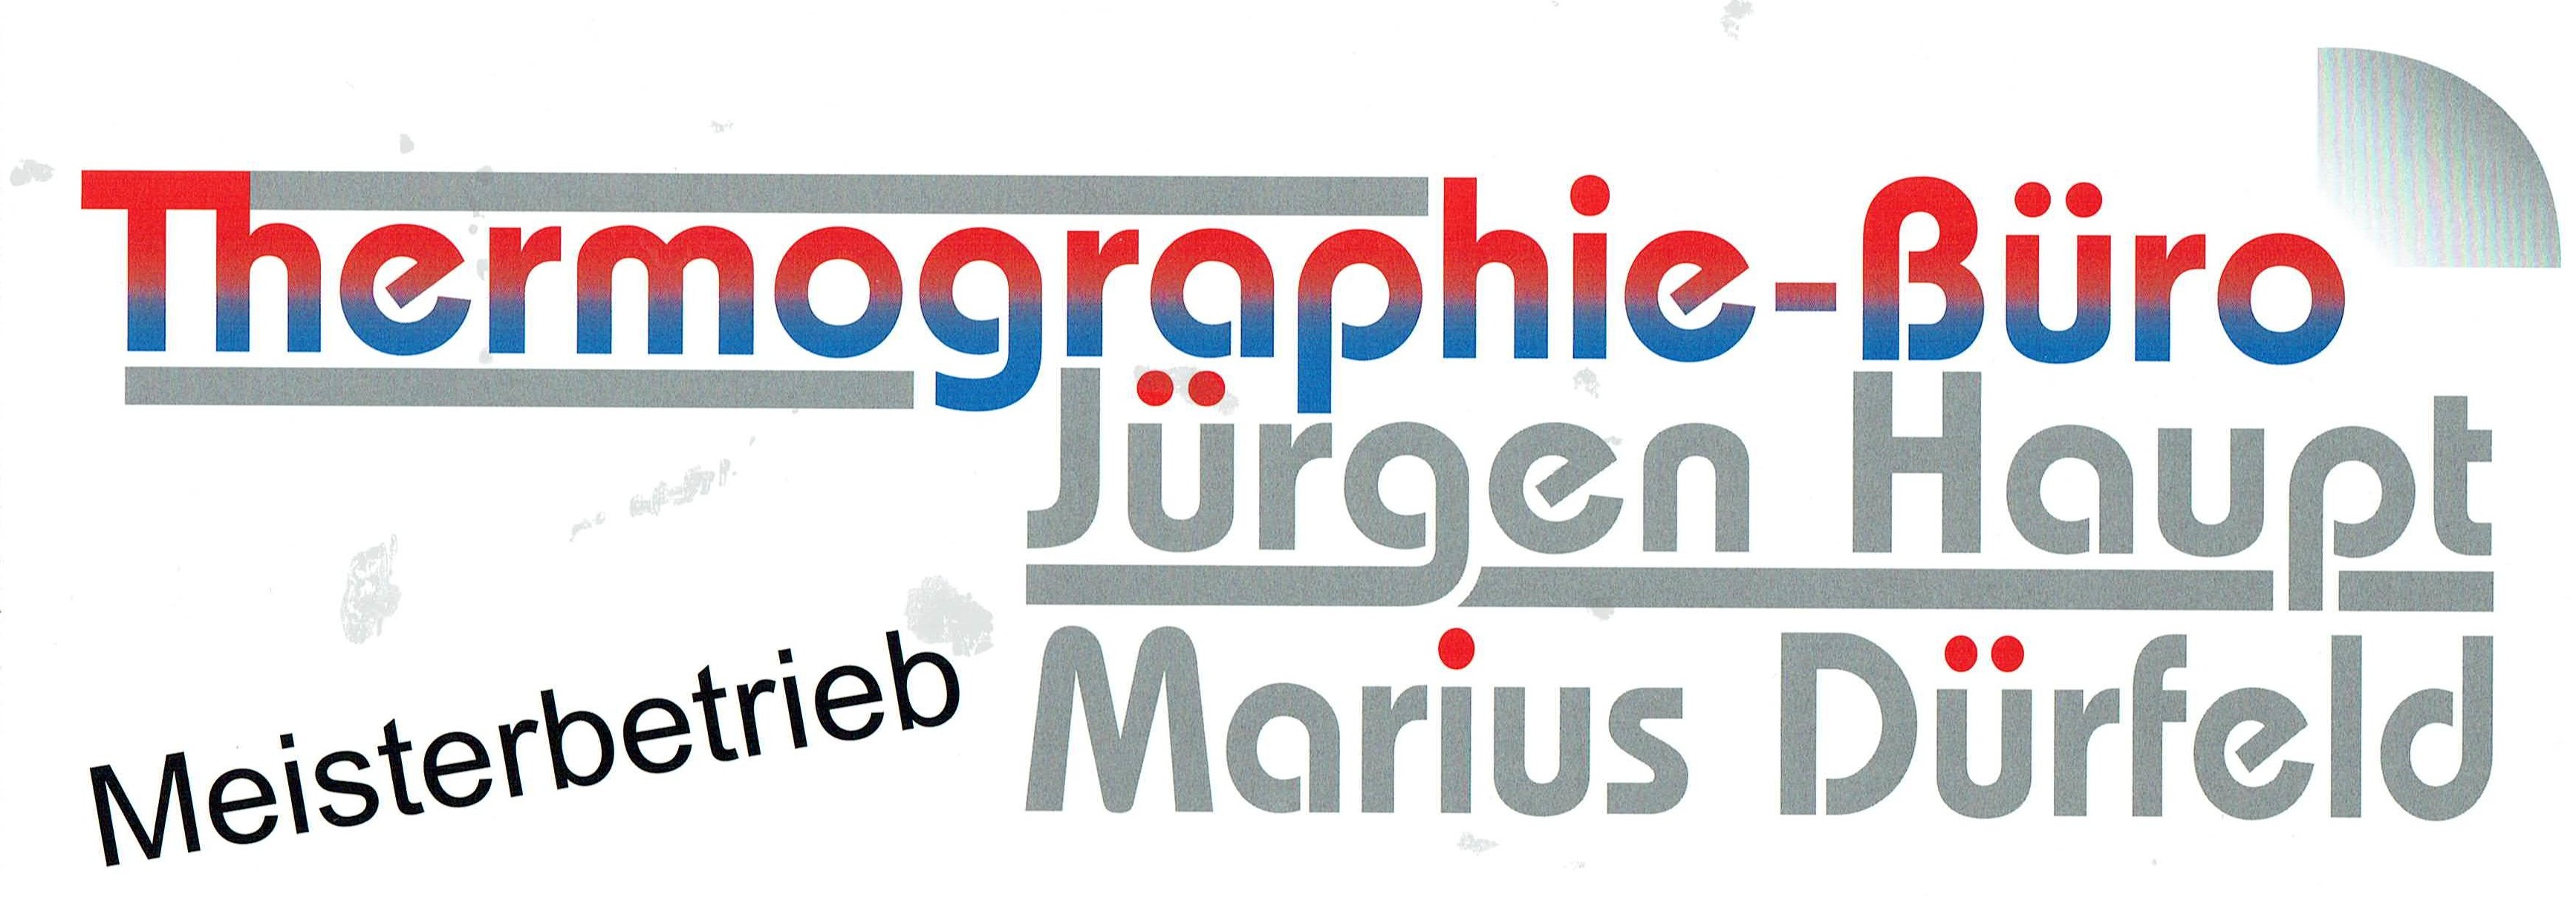 Thermographie Büro Jürgen Haupt